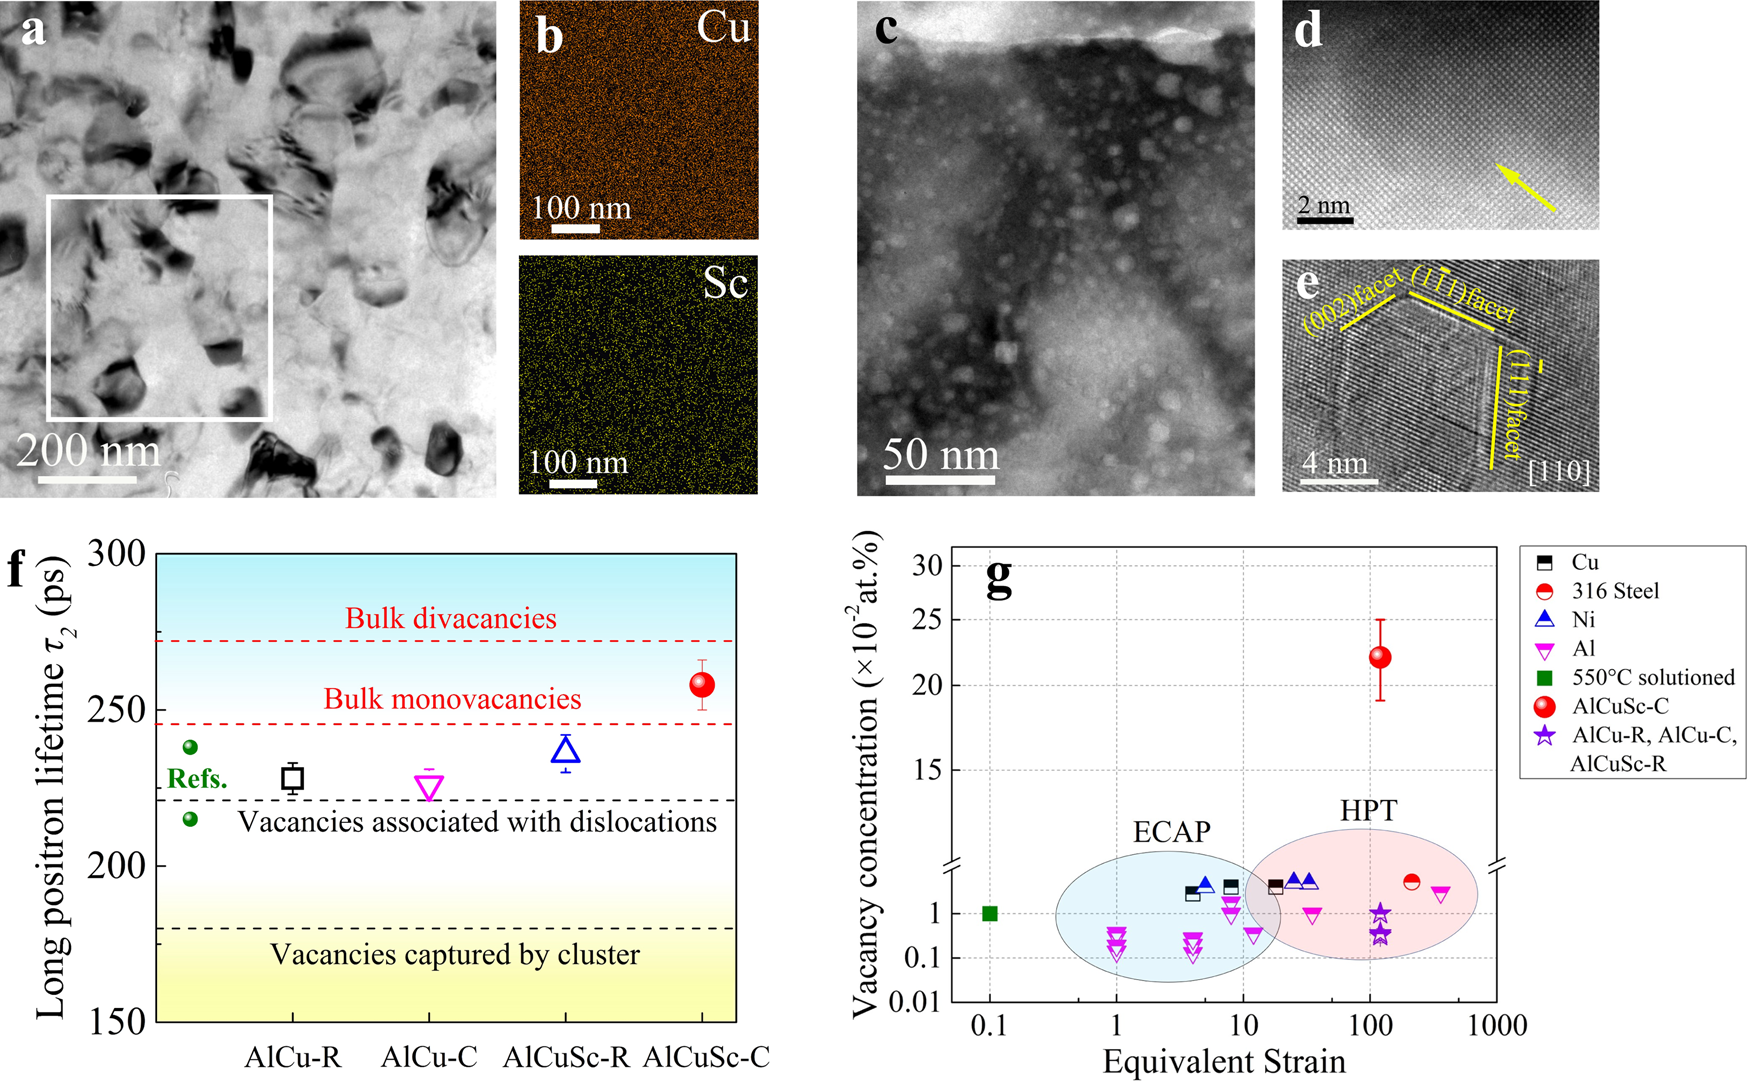 Freezing solute atoms in nanograined aluminum alloys via high